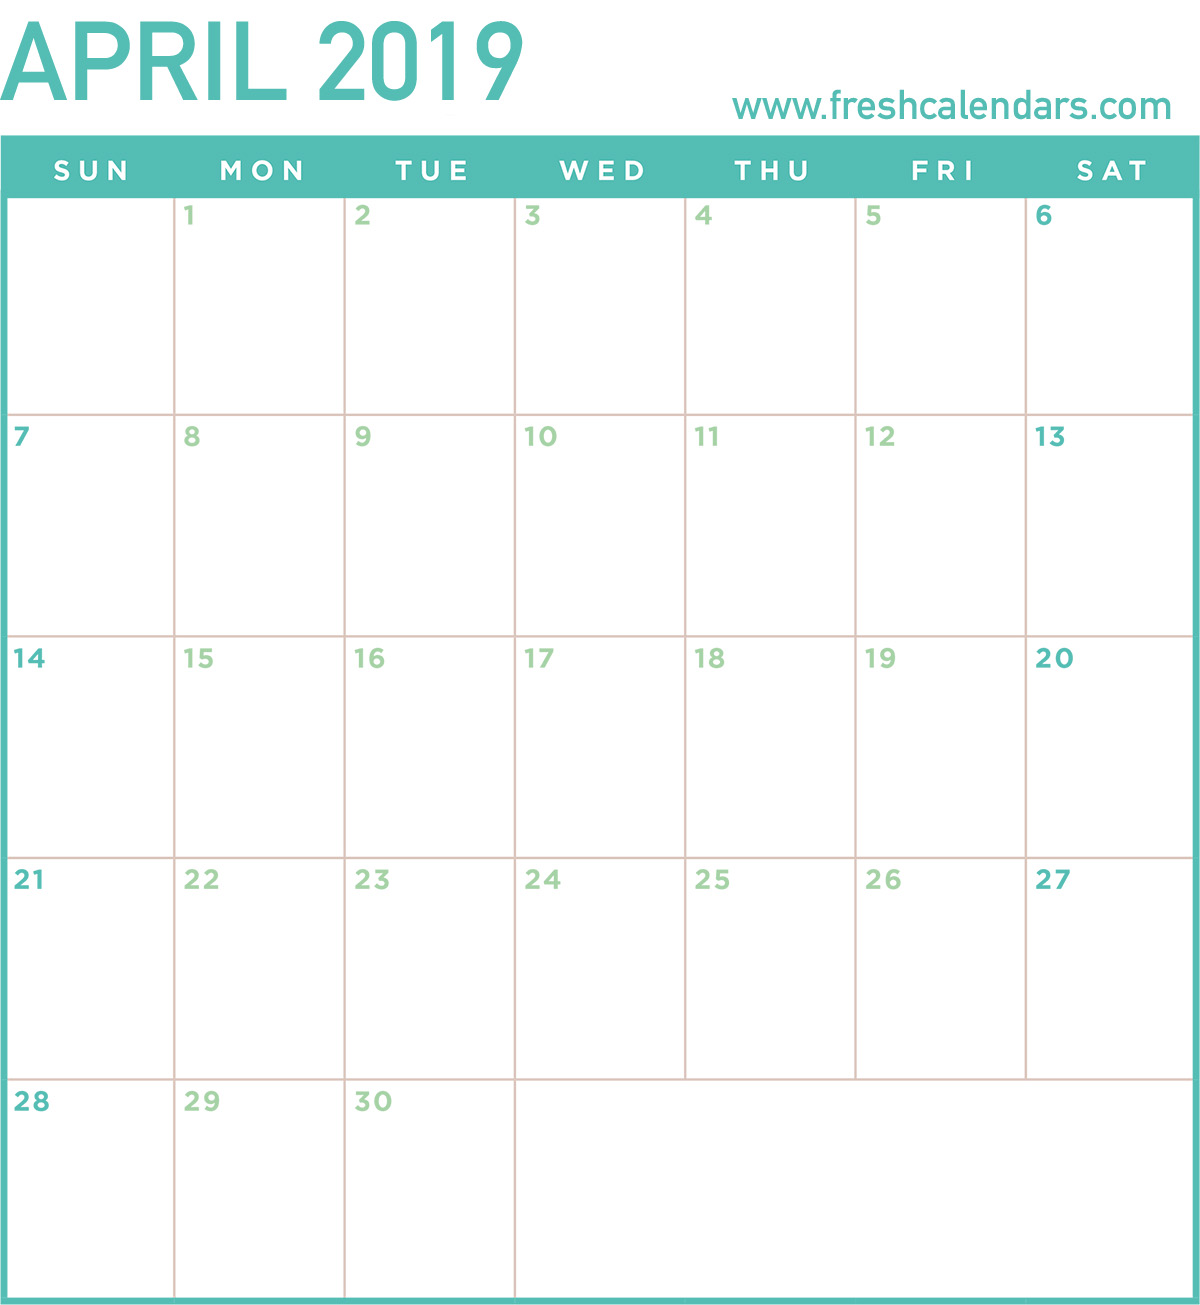 april-2019-calendar-printable